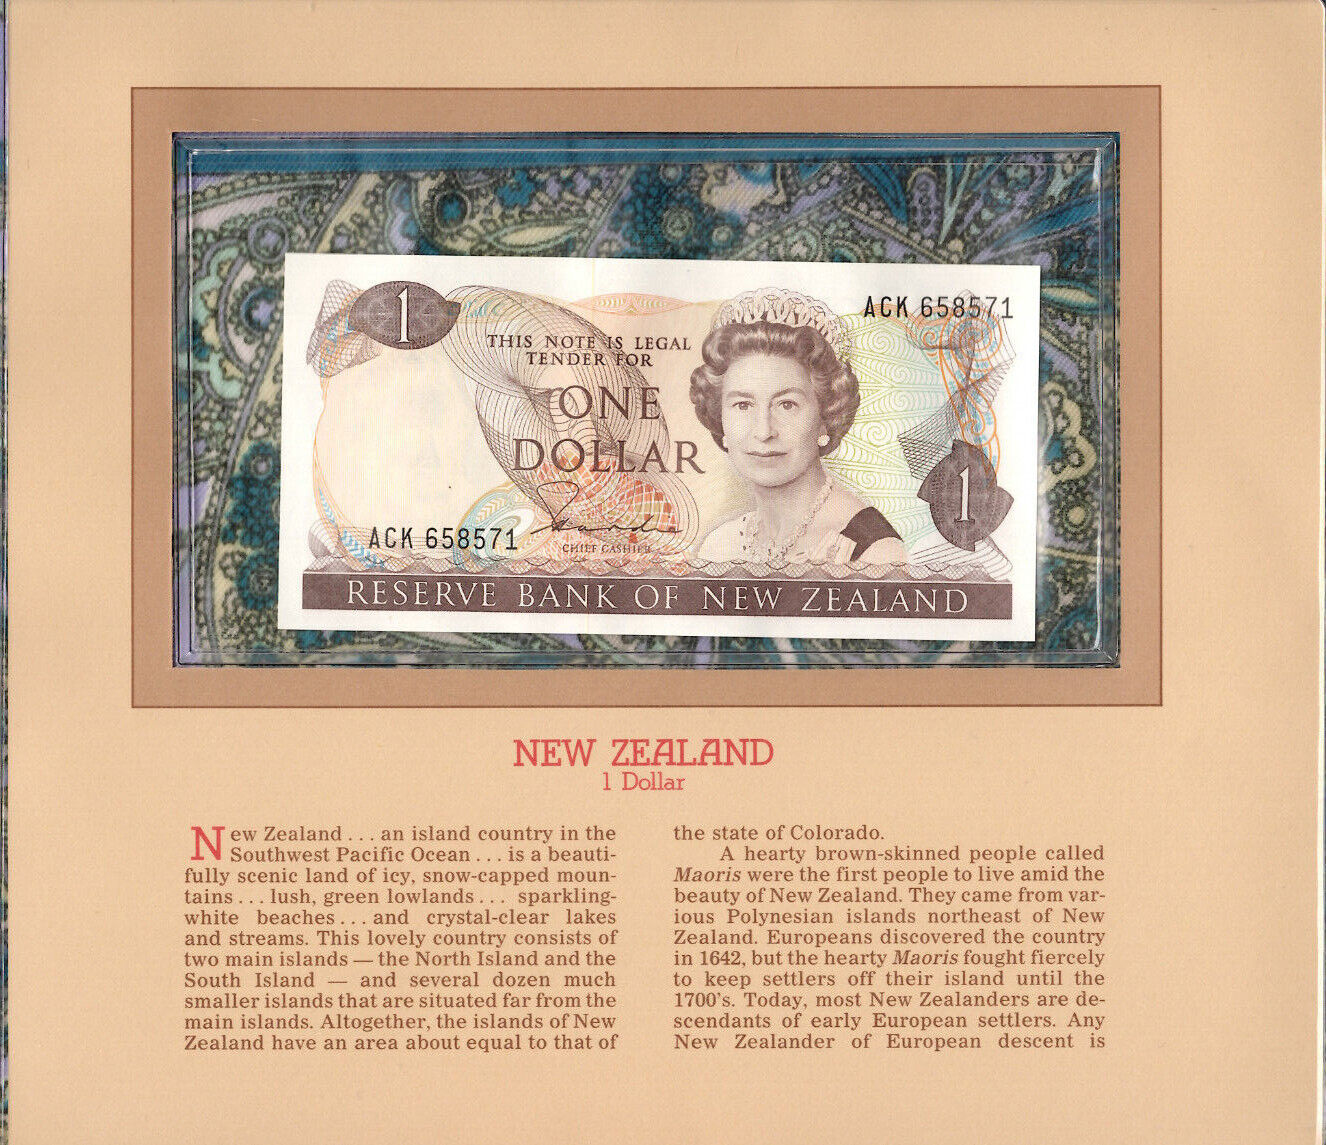 Most Treasured Banknotes New Zealand 1981-85 1 Dollar Unc P-169a Ack 658571